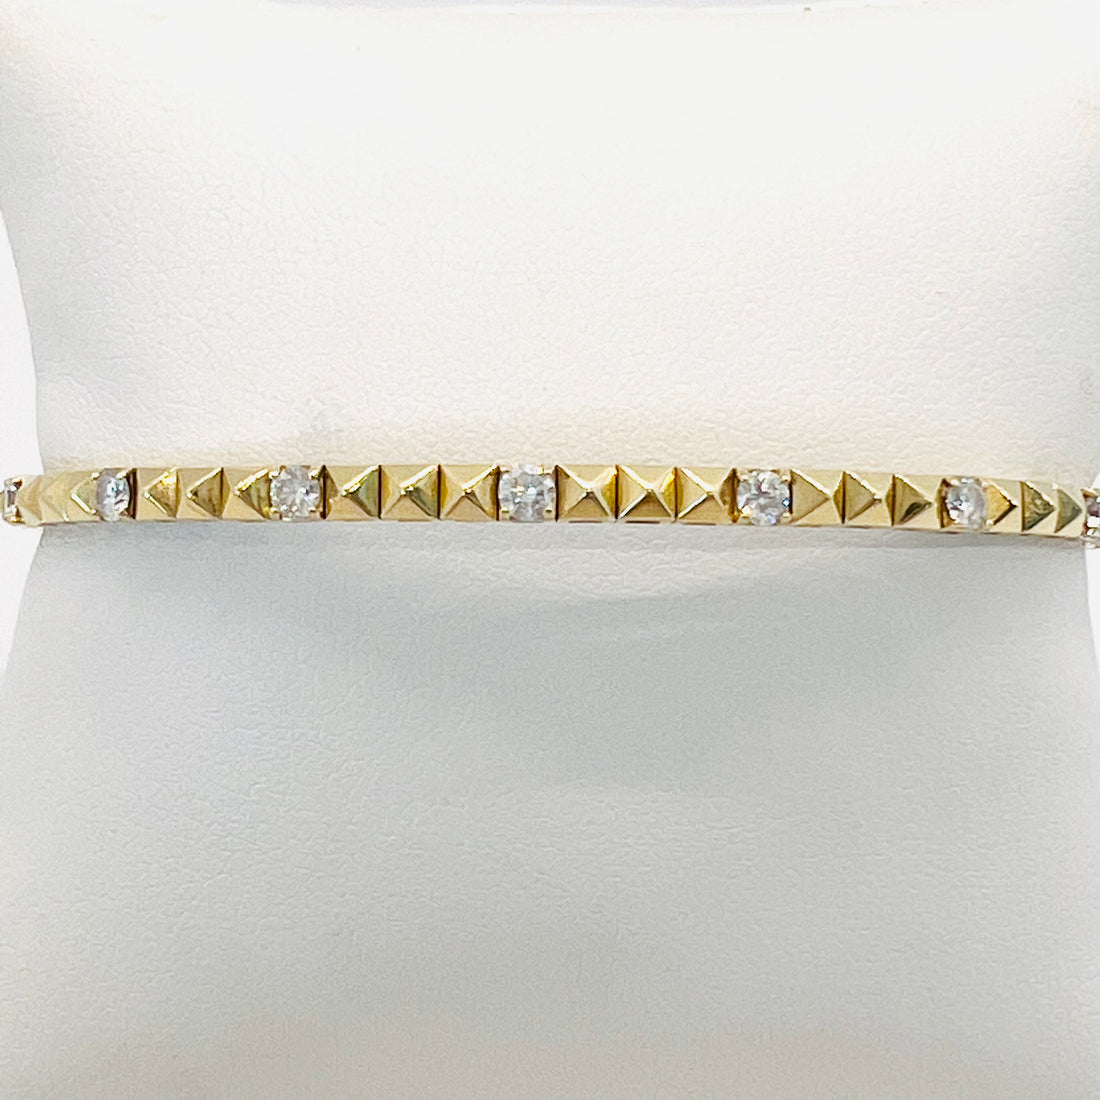 flexible 14k gold and diamond bangle bracelet